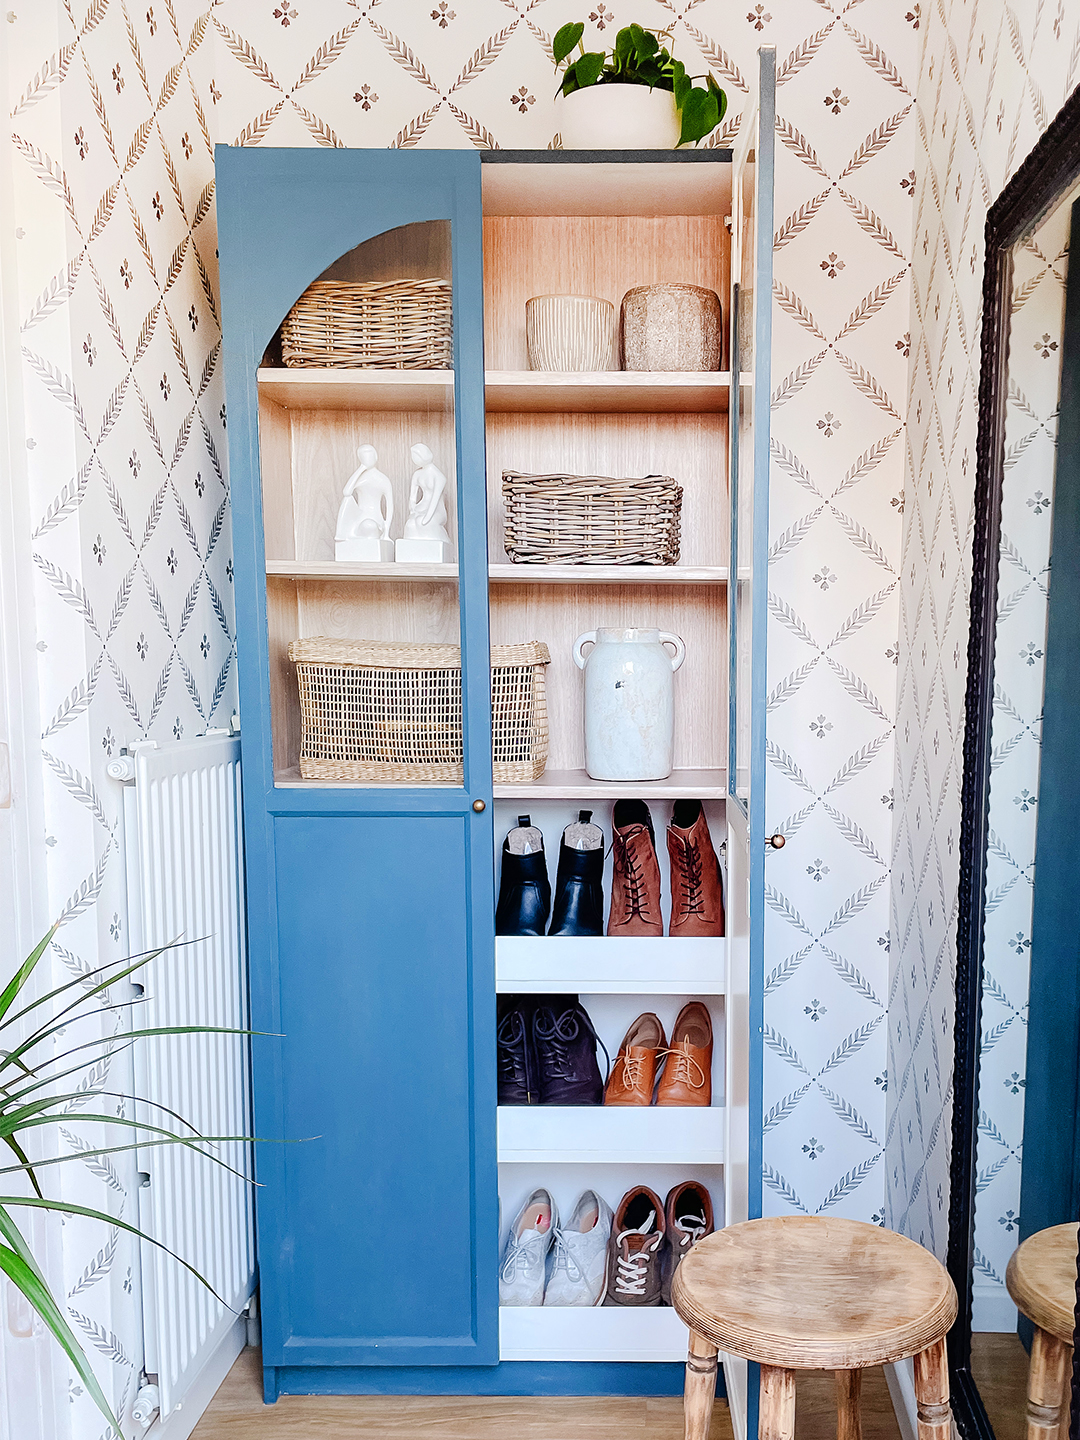 Shoe shelf for small spaces - IKEA Hackers